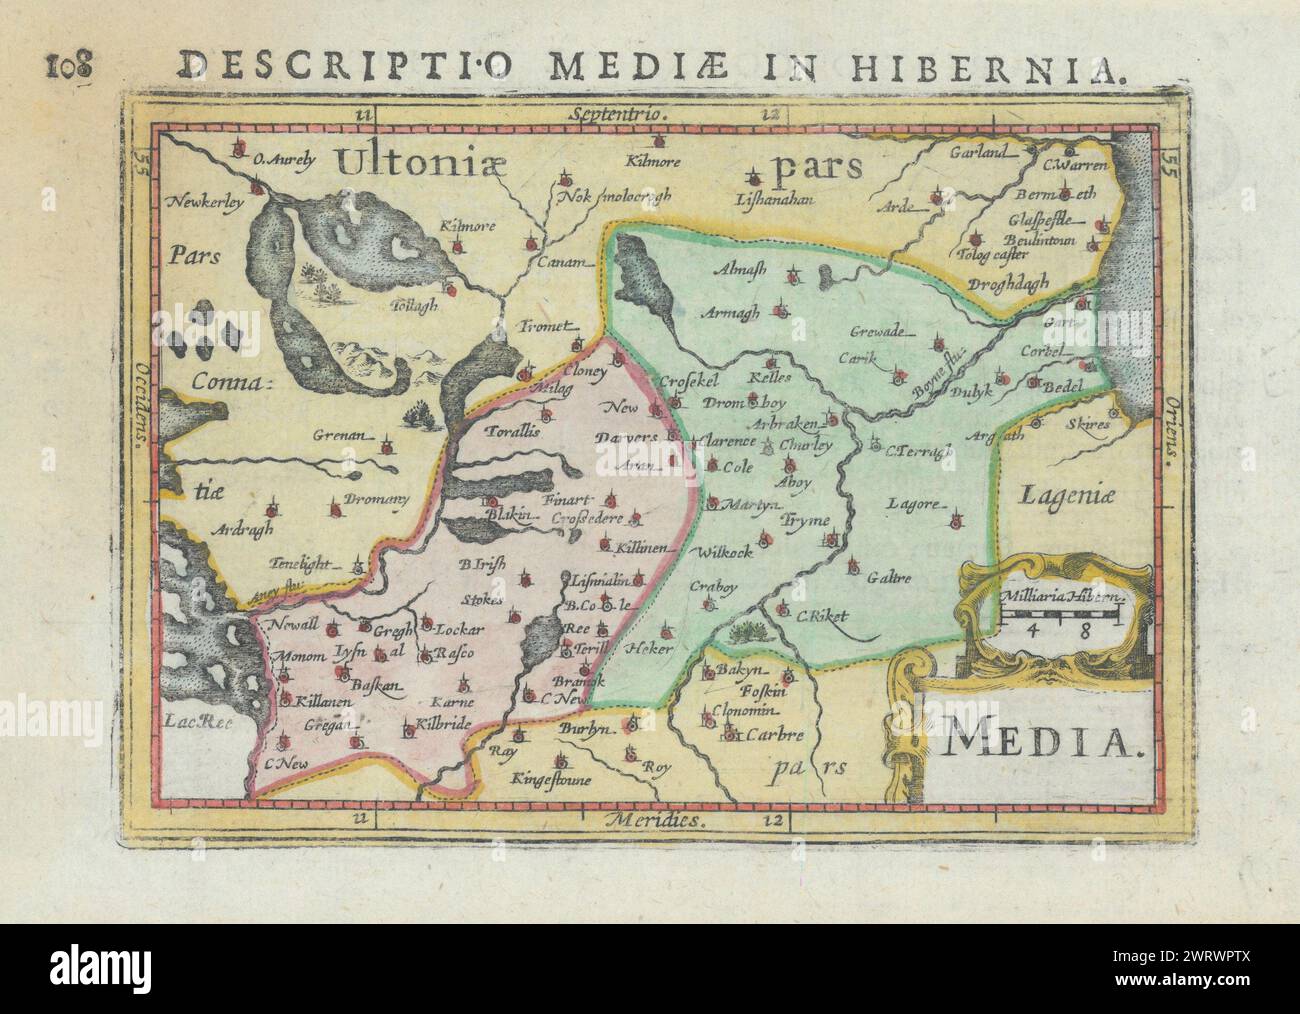 Descriptio Mediae in Hibernia. Central Ireland Ulster/Leinster. BERTIUS 1616 map Stock Photo